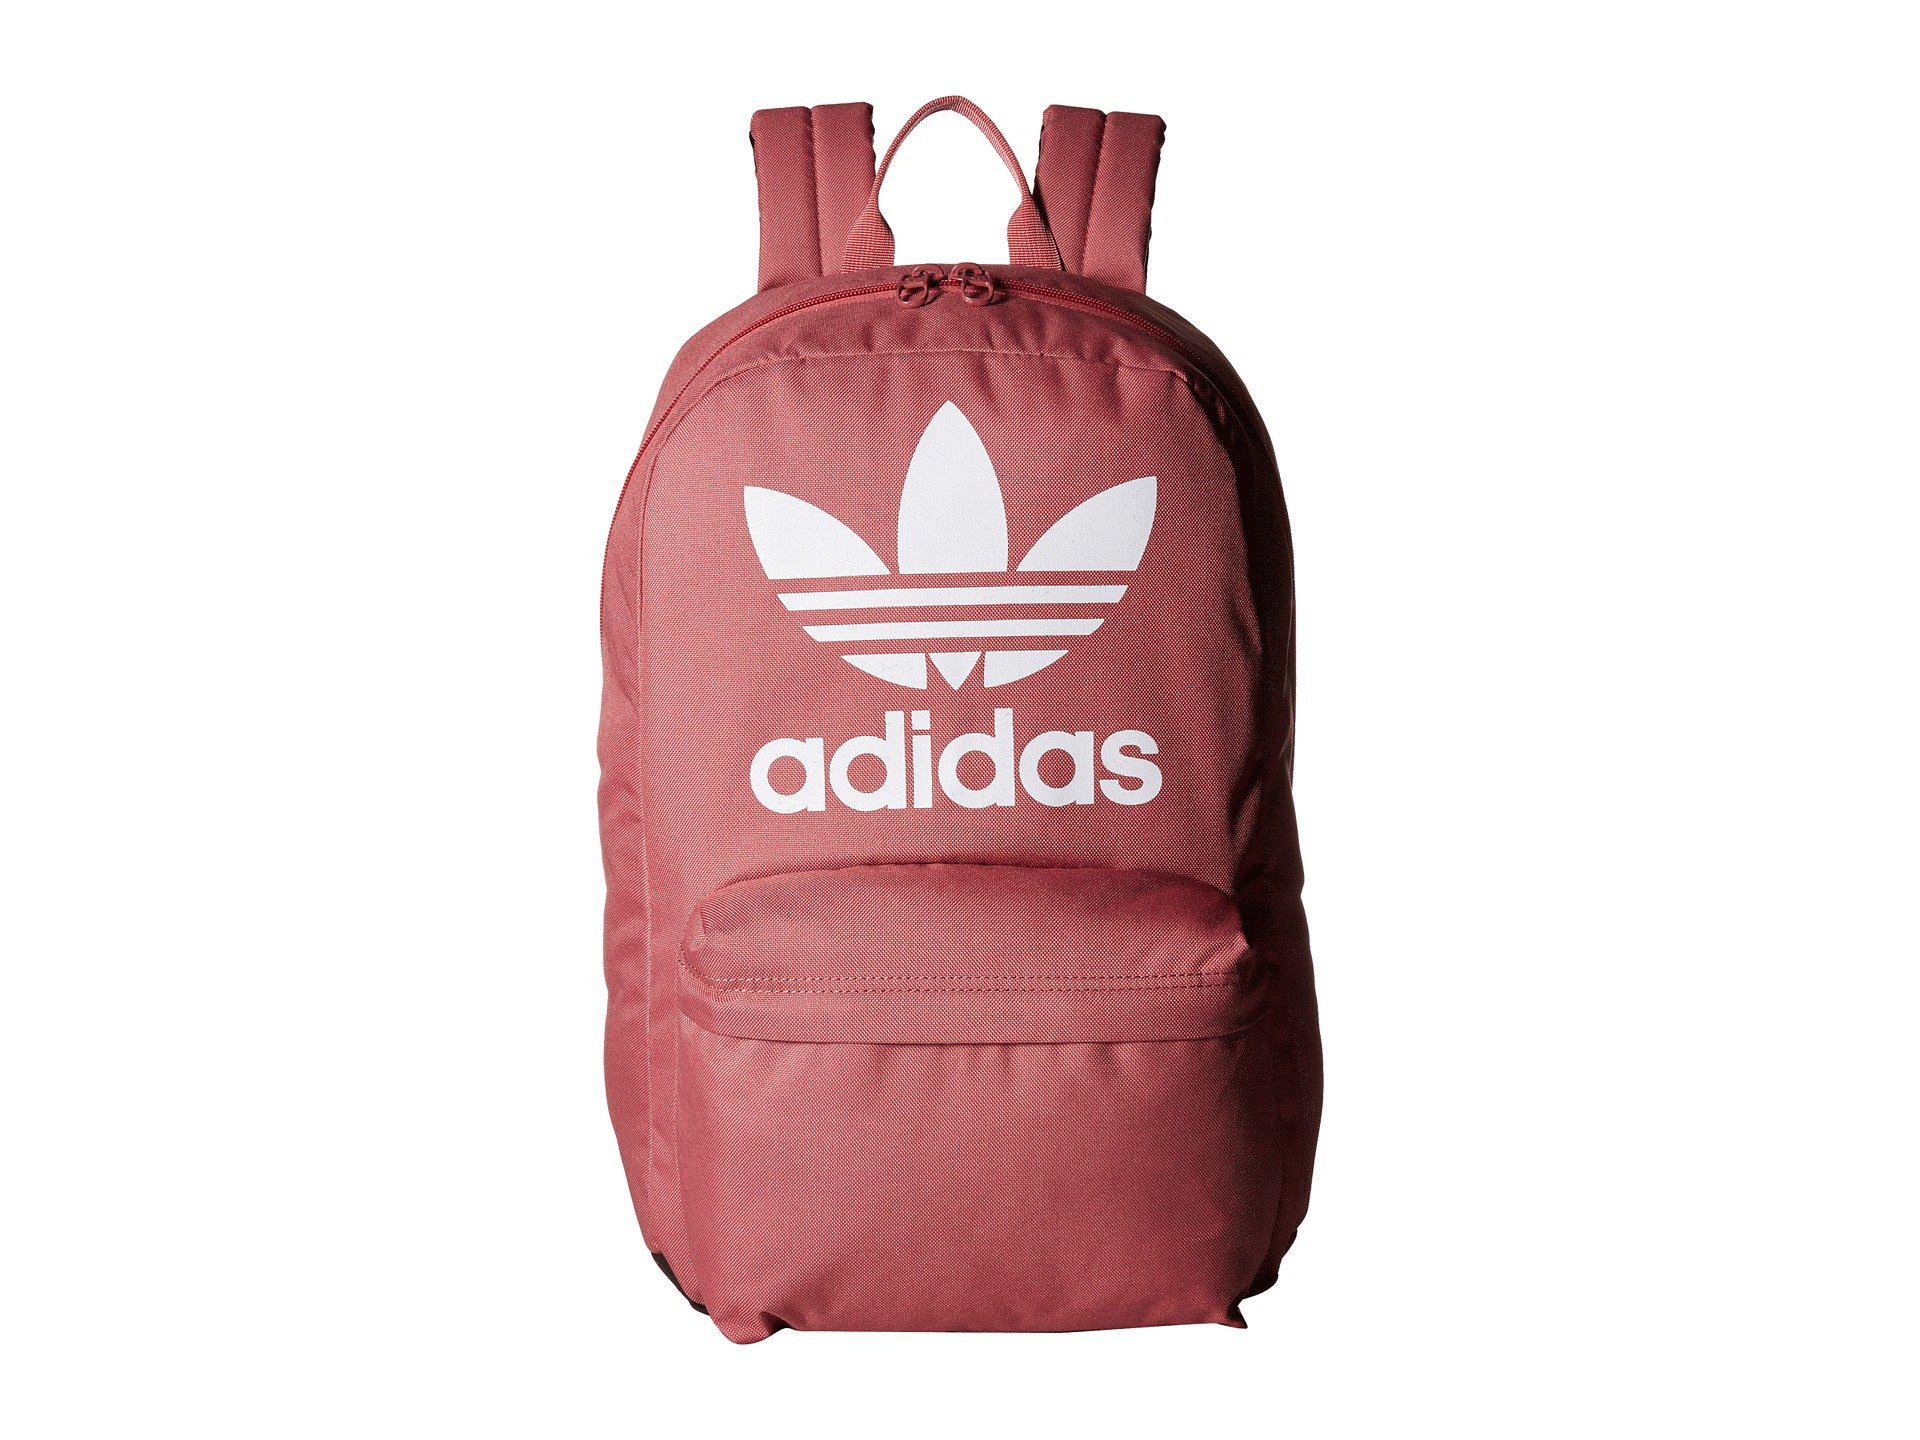 adidas classic big logo backpack